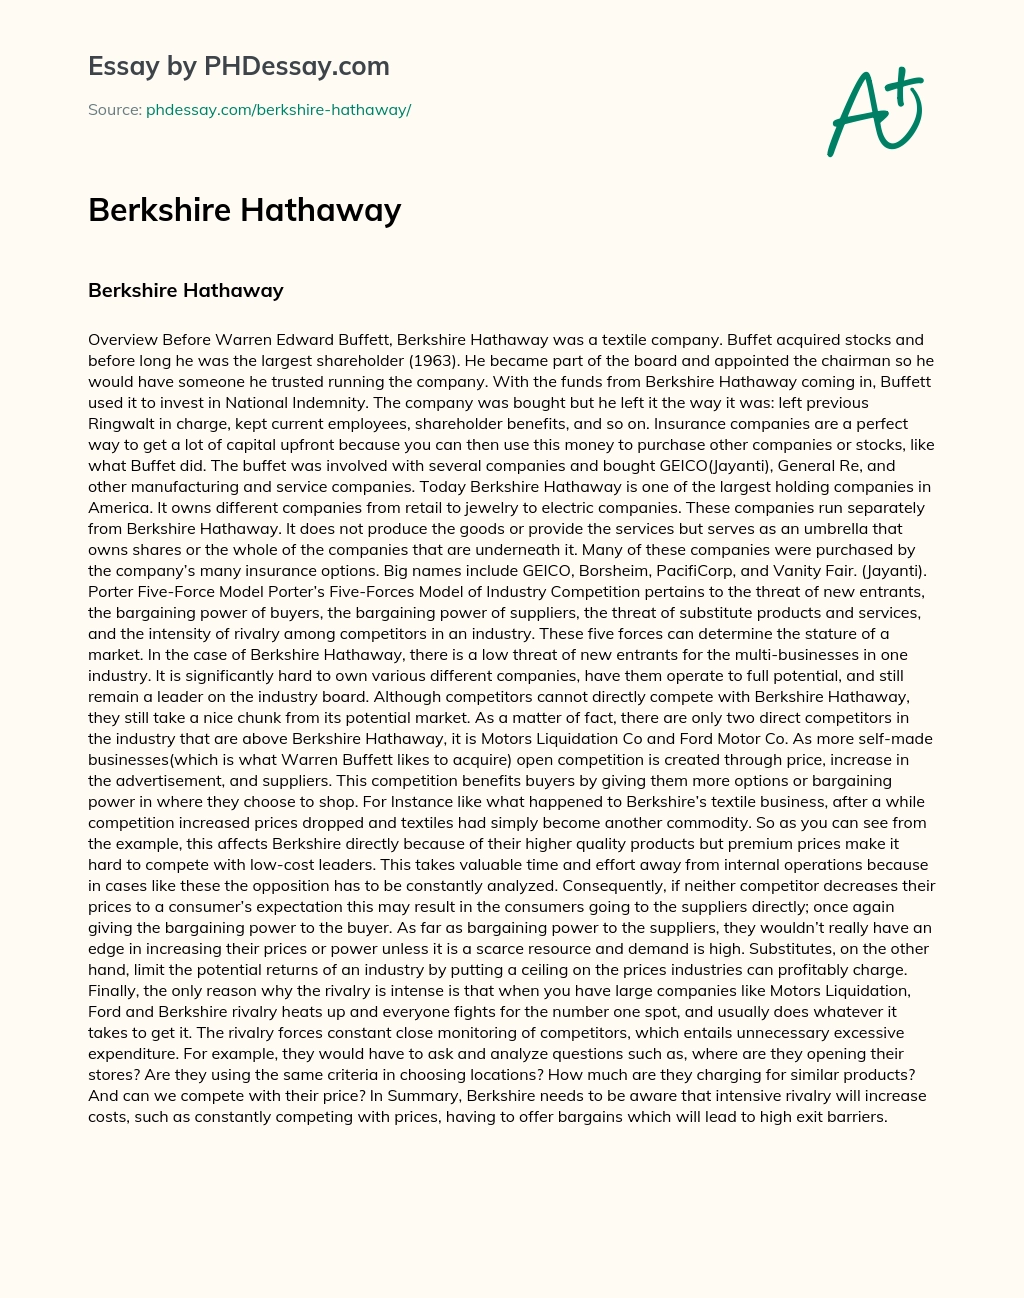 Berkshire Hathaway essay